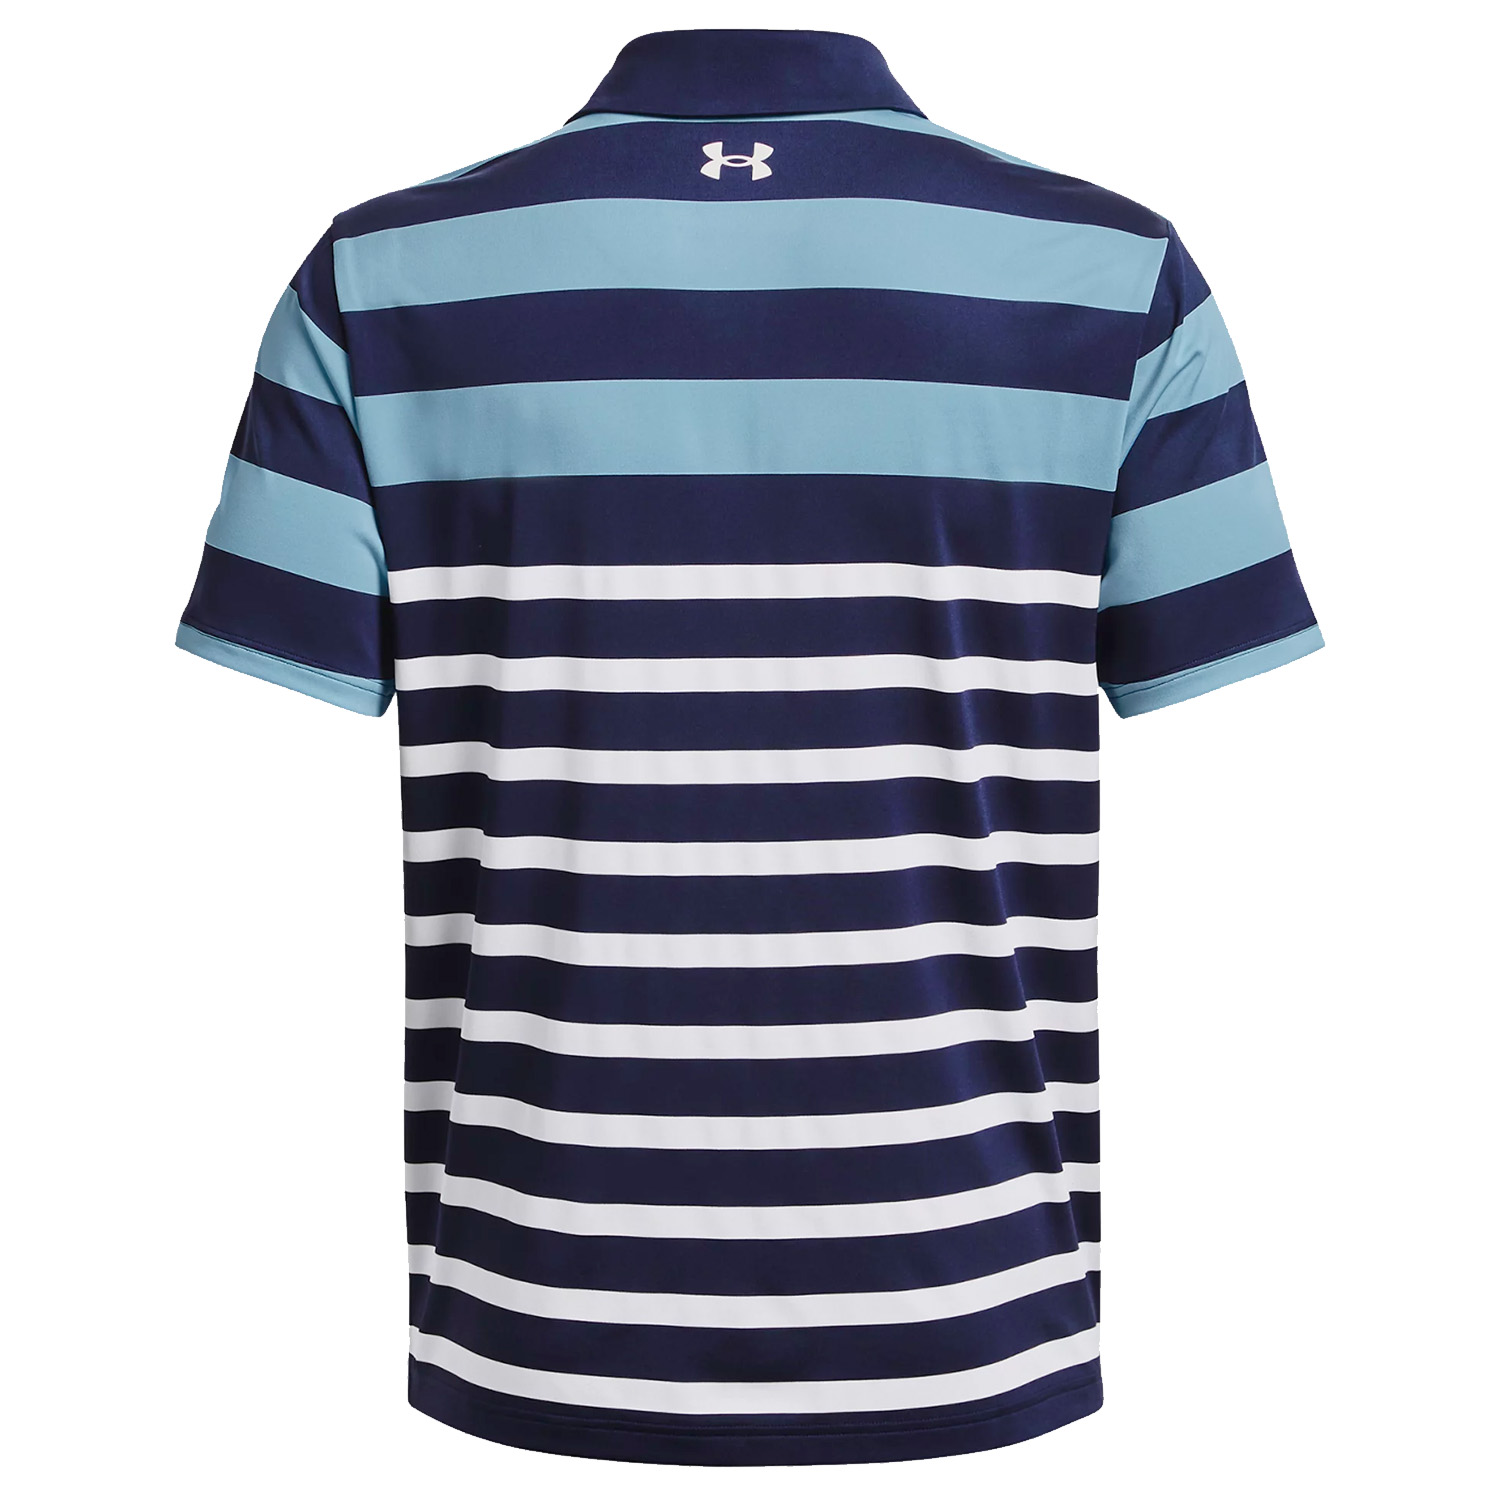 Under Armour Golf Playoff 3.0 Stripe Polo Shirt  - Midnight Navy/Blue/White